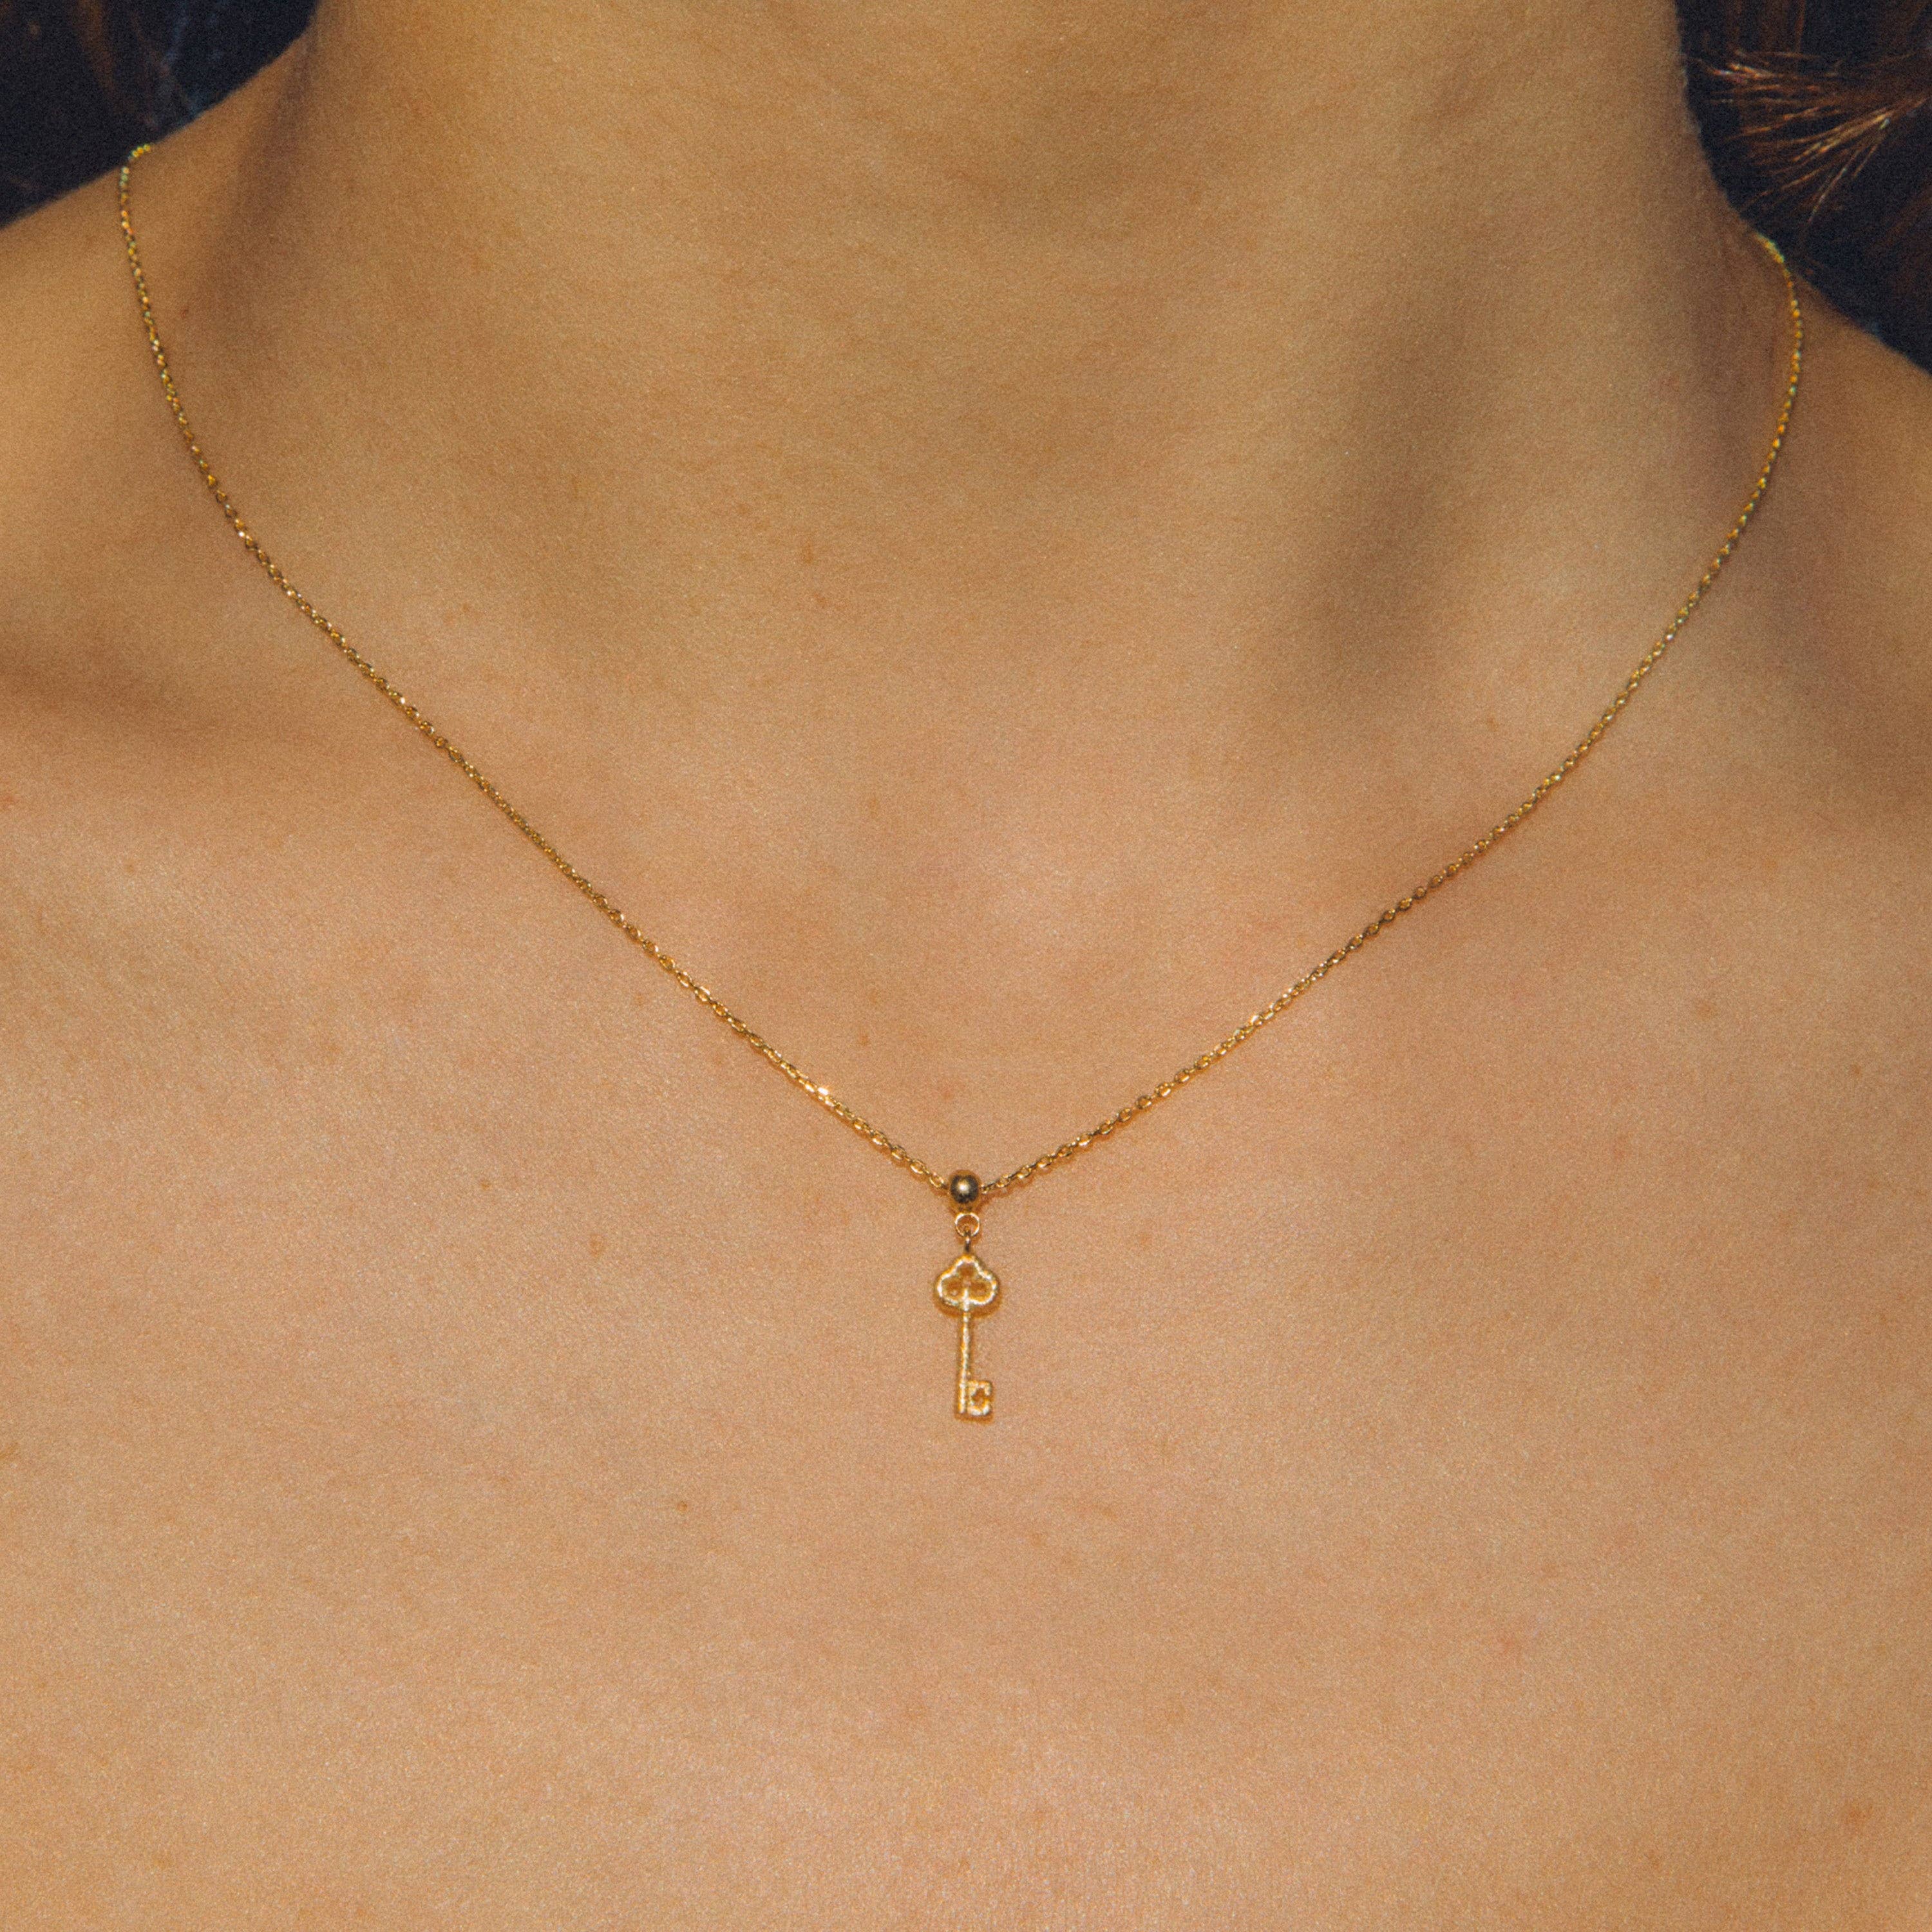 Agapé Studio Jewelry - Luzón Charm | Jewelry Gold Gift Waterproof: Charm + Chain Necklace